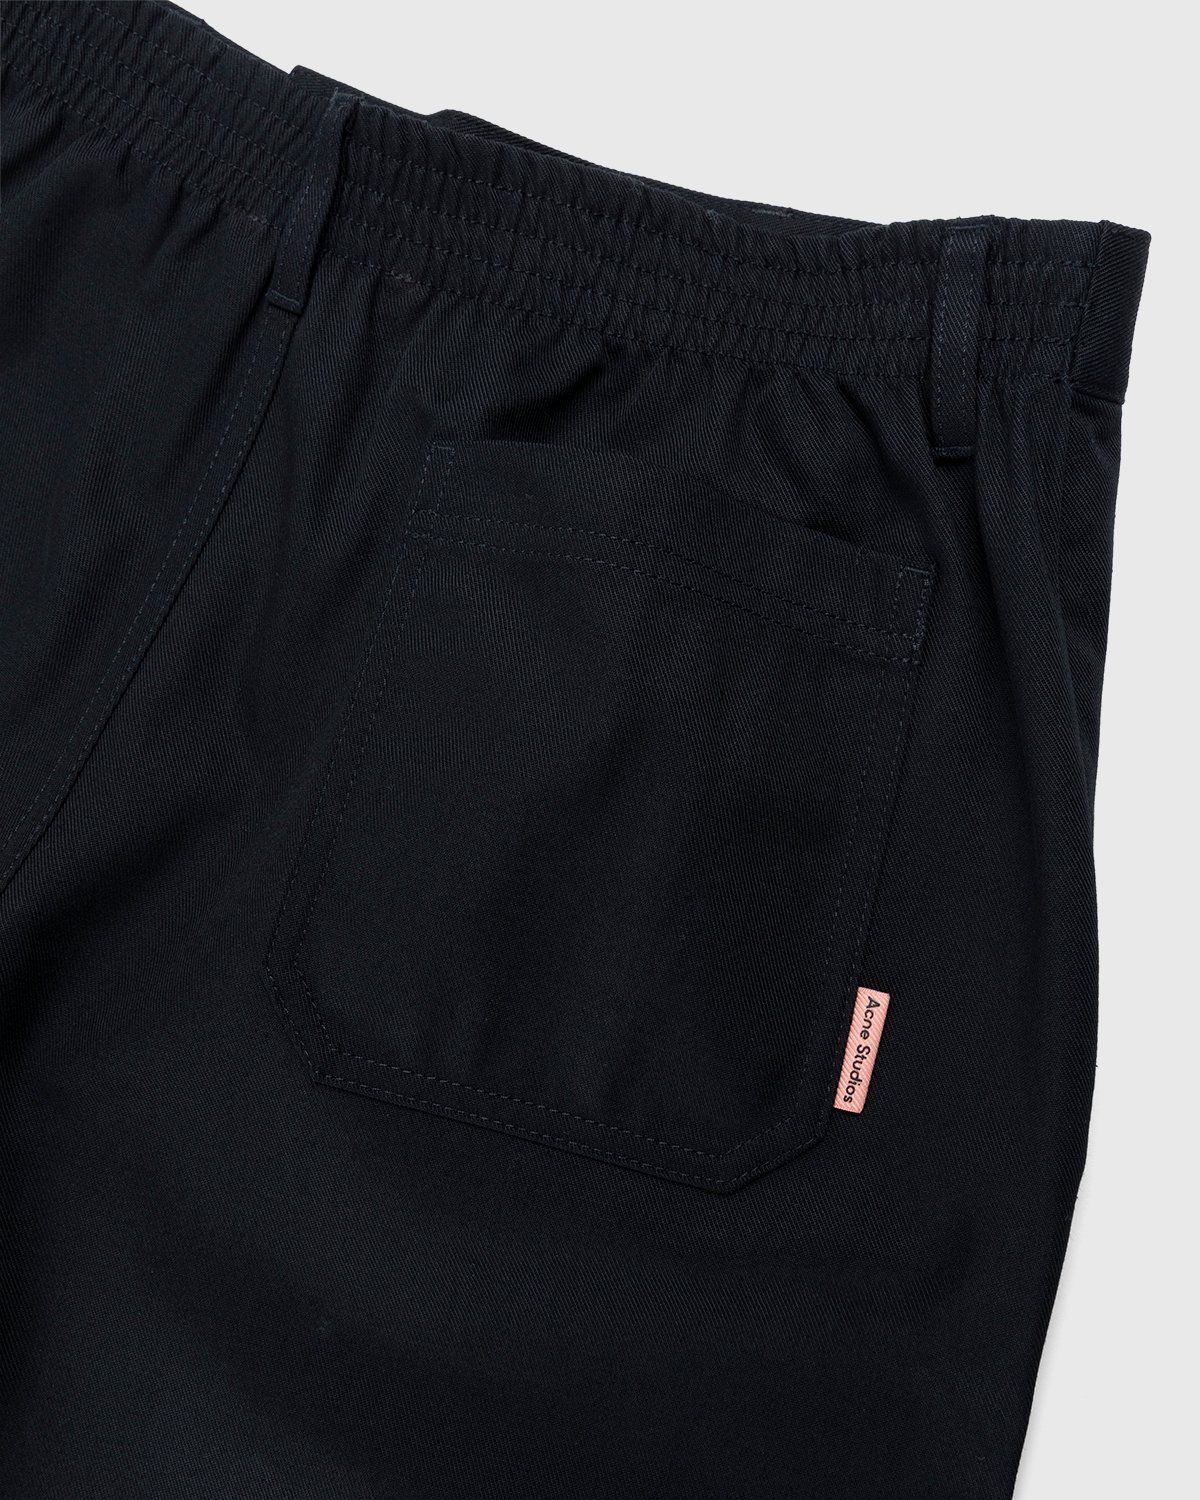 Acne Studios – Ringa Cotton Mix Twill Shorts Black - Shorts - Black - Image 3